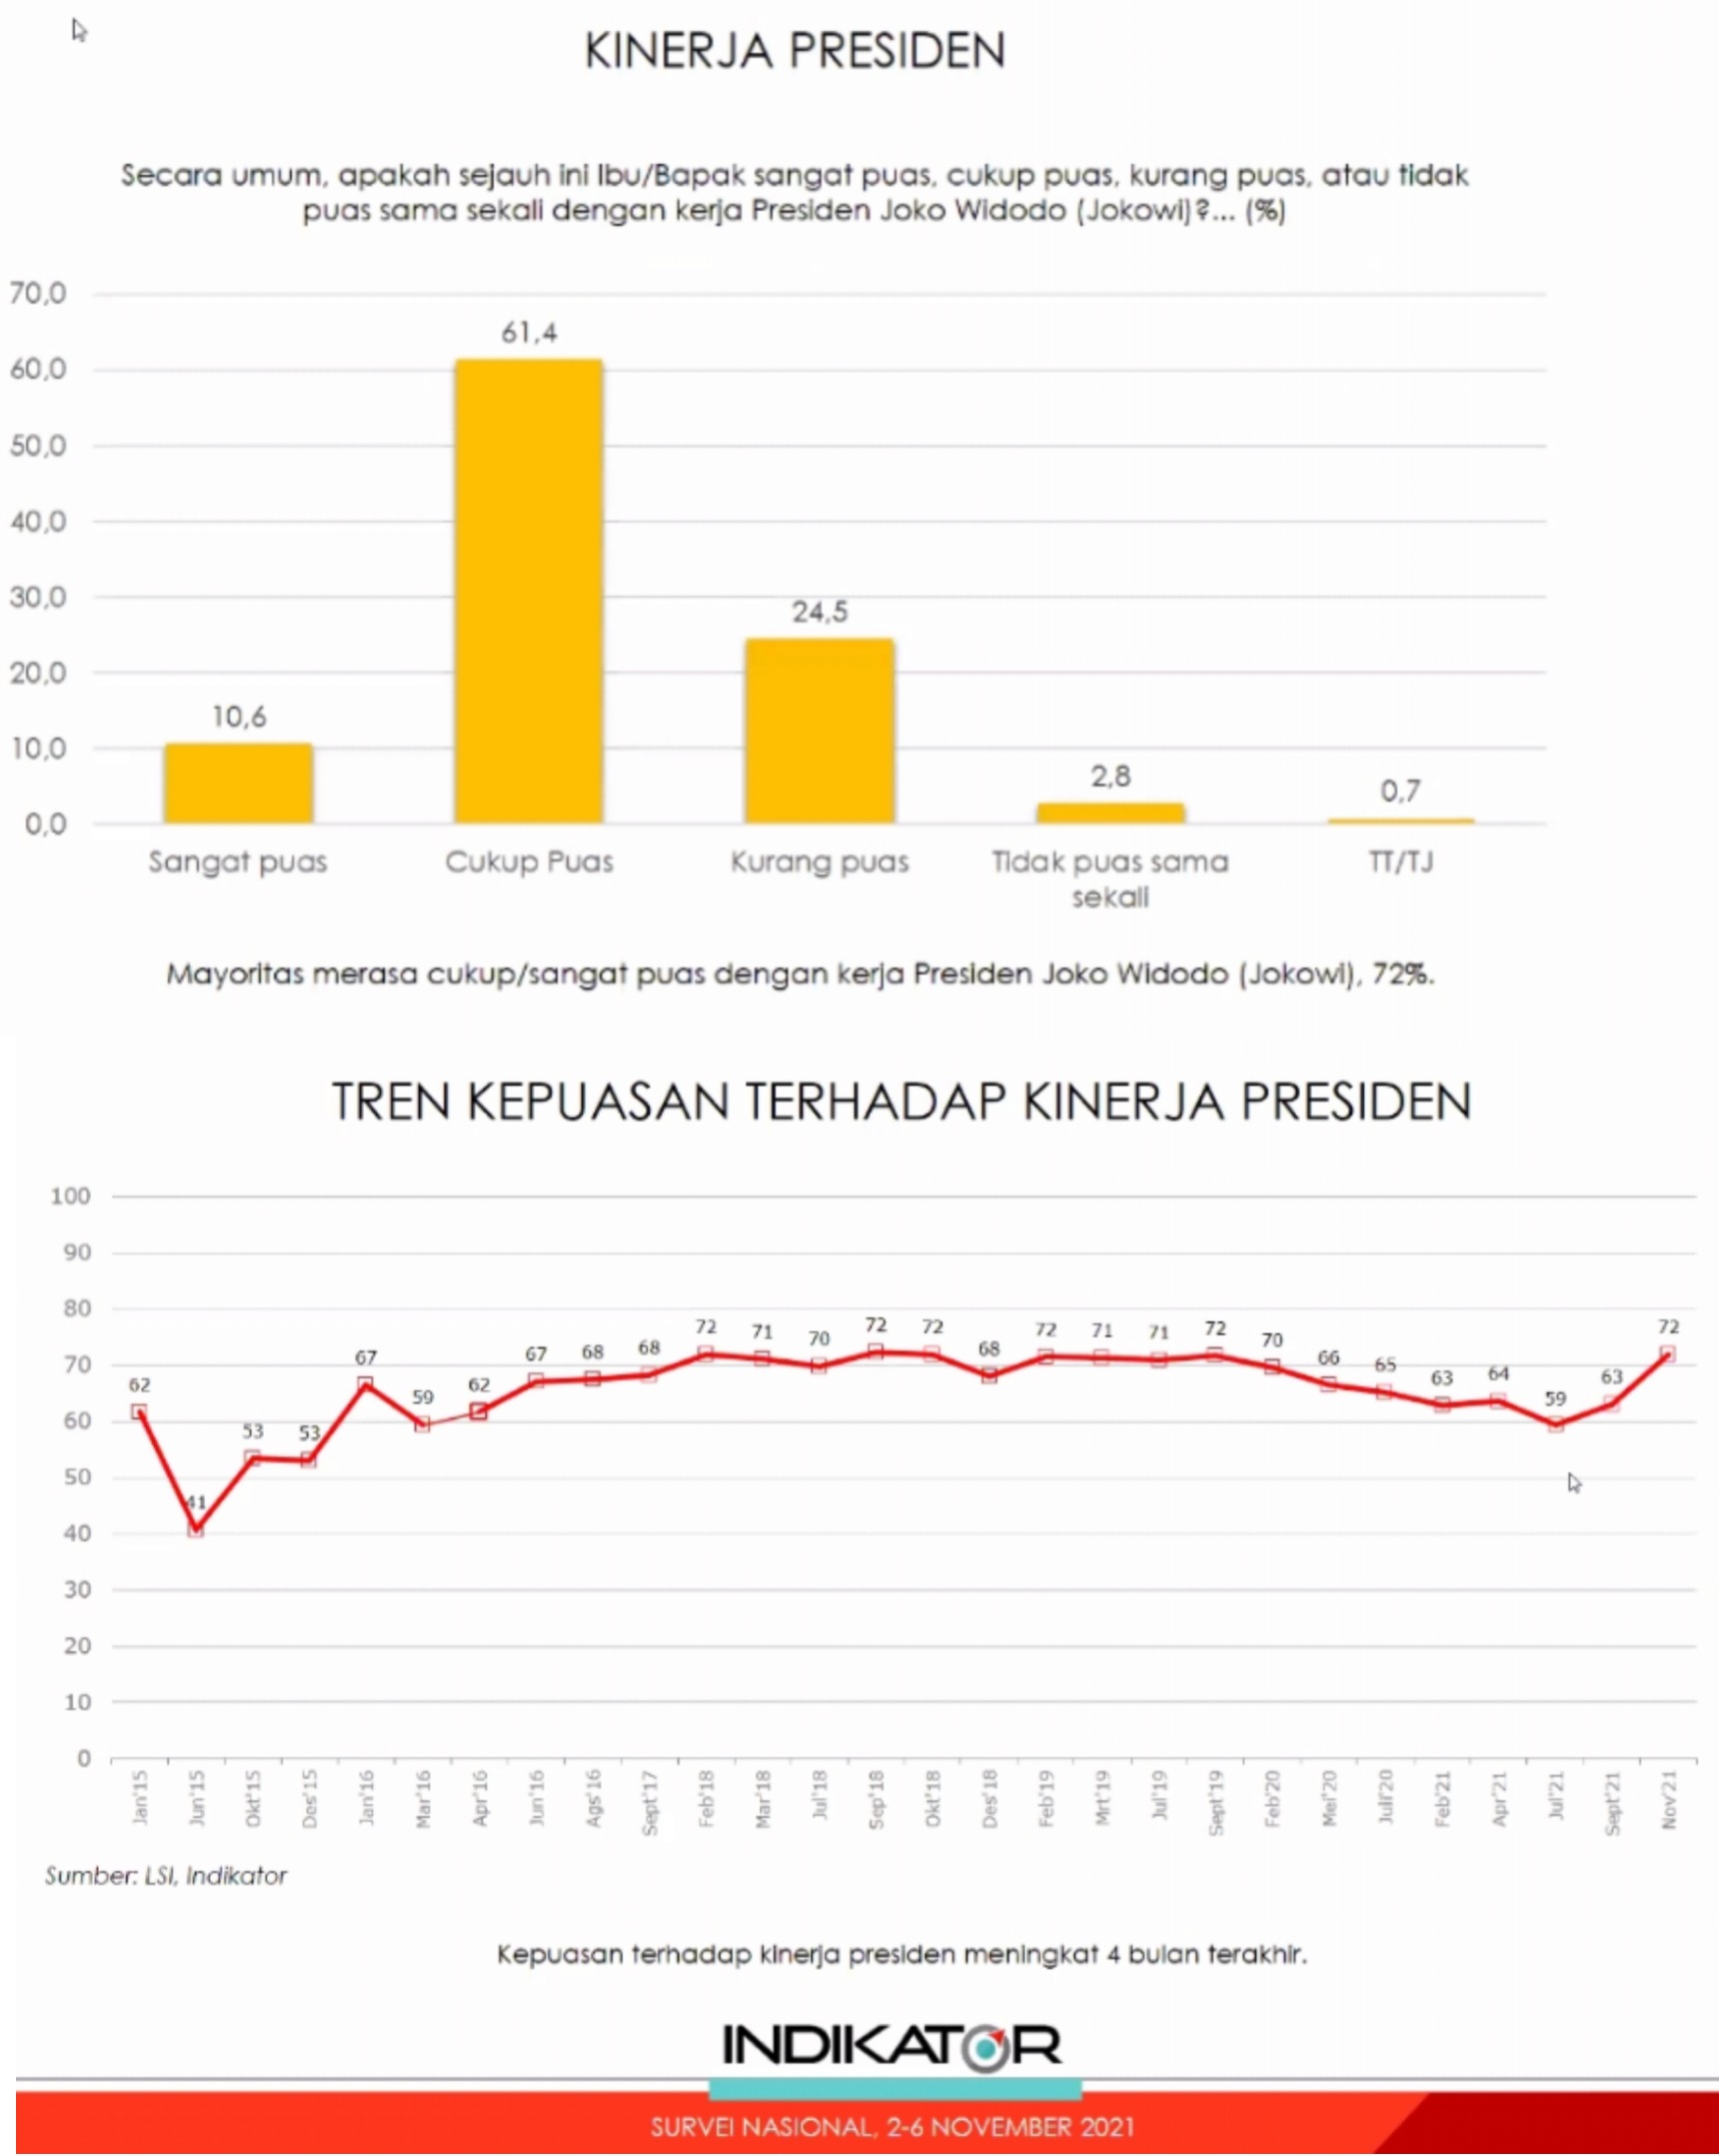 Penilaian masyarakat terhadap kinerja Presiden Jokowi pada November 2021